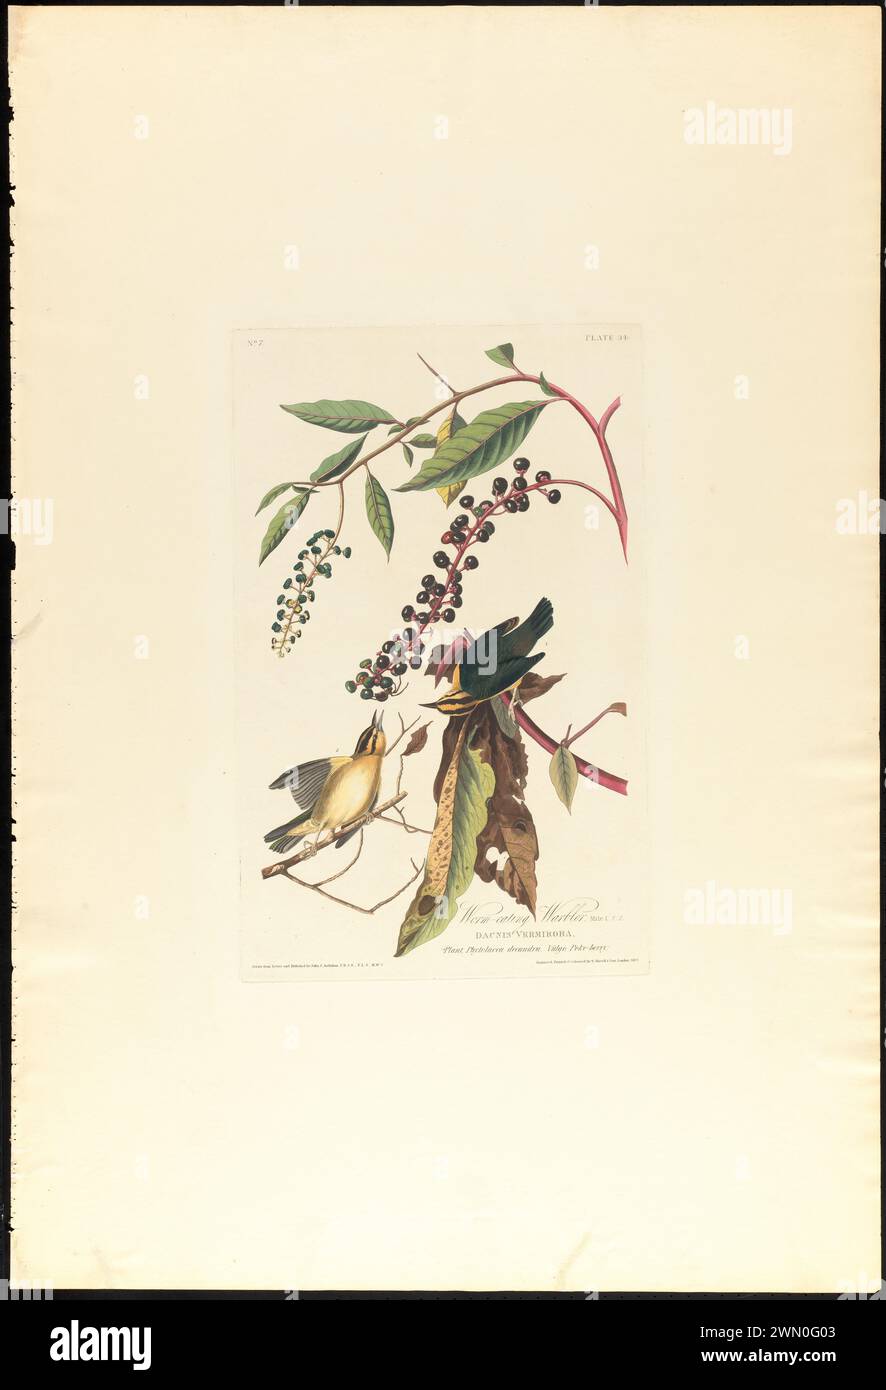 Worm-eating warbler : Male, 1. F, 2. Dacnis vermirora. Plant, phytolacca decandra. Vulgo, poke-berry. c.2 v.1 plate 34. Worm-eating warbler : Male, 1. F, 2. Dacnis vermirora. Plant, phytolacca decandra. Vulgo, poke-berry. c.2 v.1 plate 34 Stock Photo